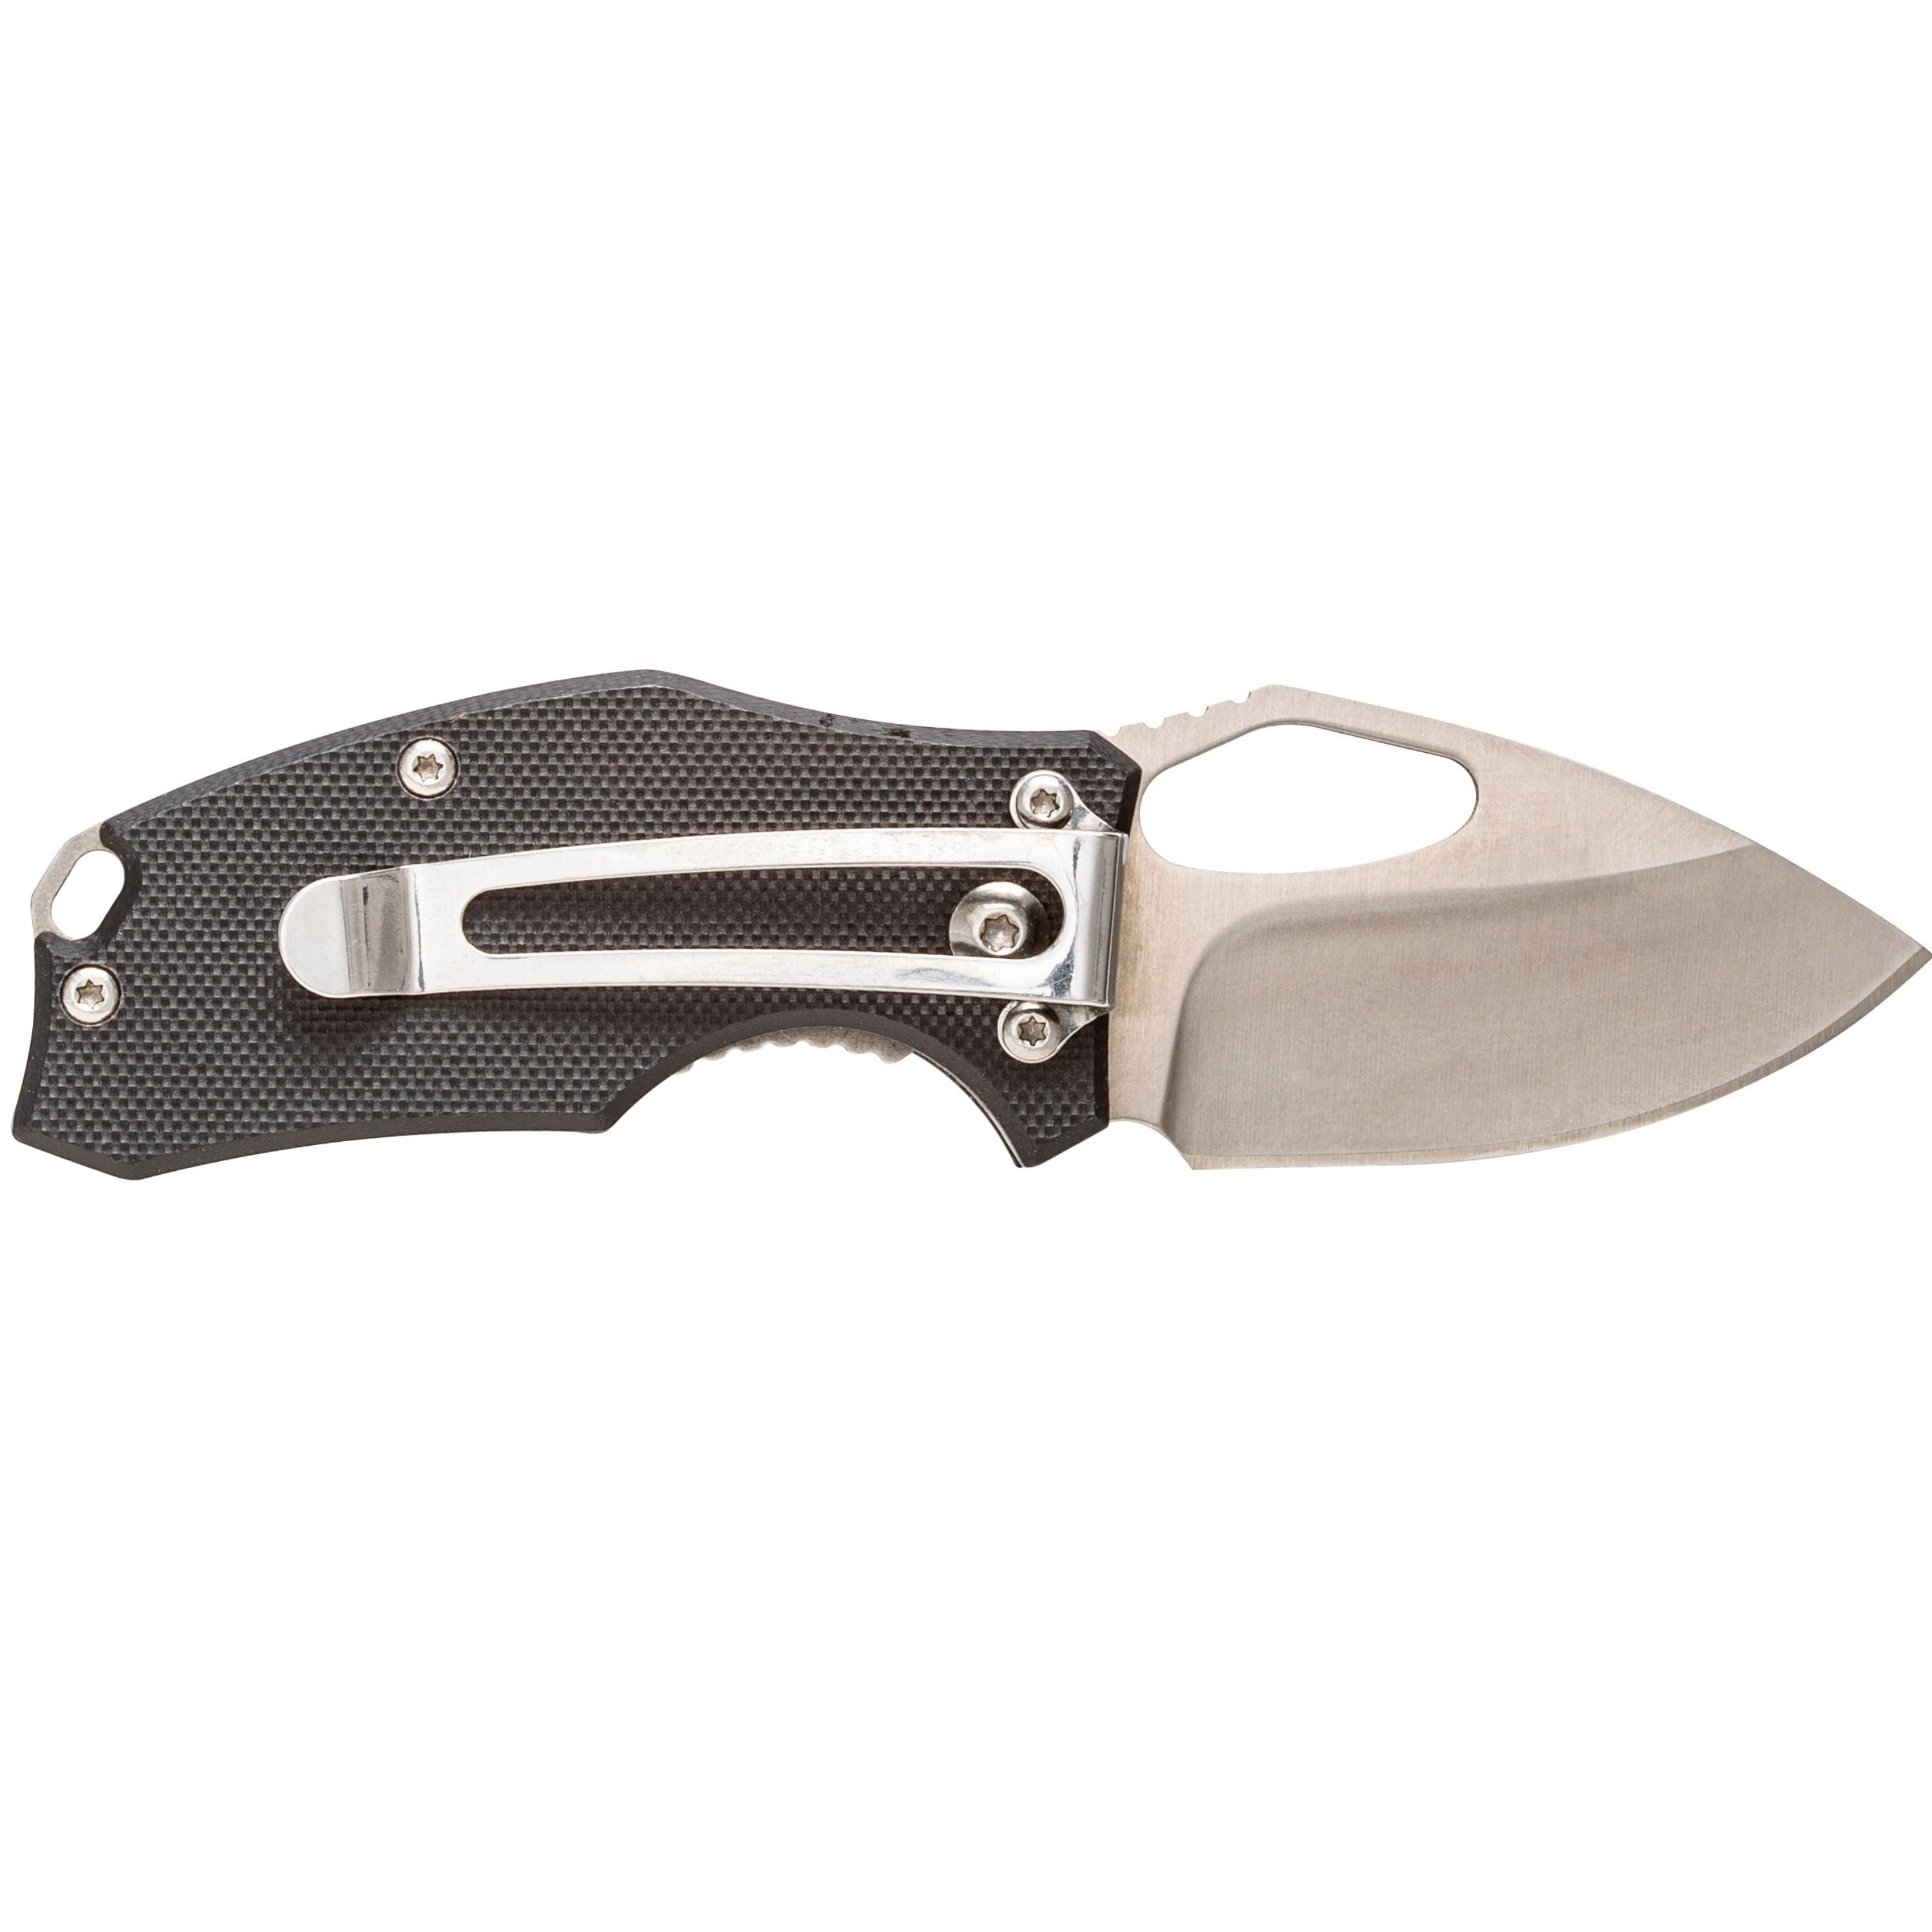 "Lil Choncho" 2.2” drop point blade folding knife